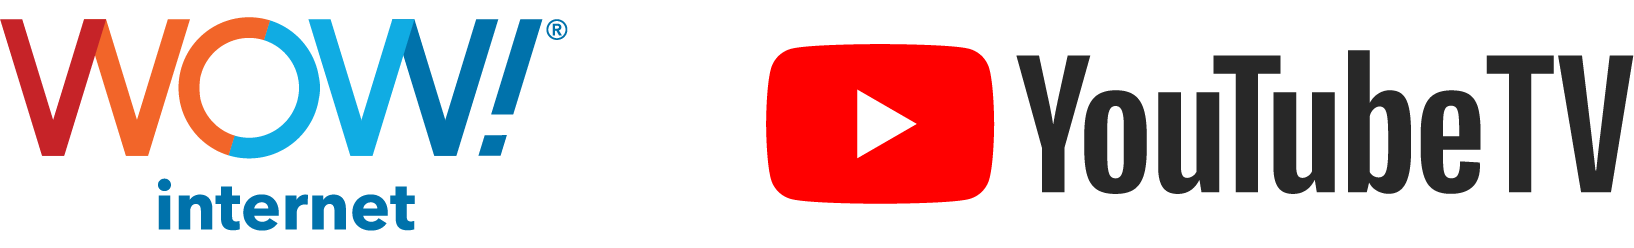 WOW-internet YouTubeTV Logos horz 4c white-divider-line RGB